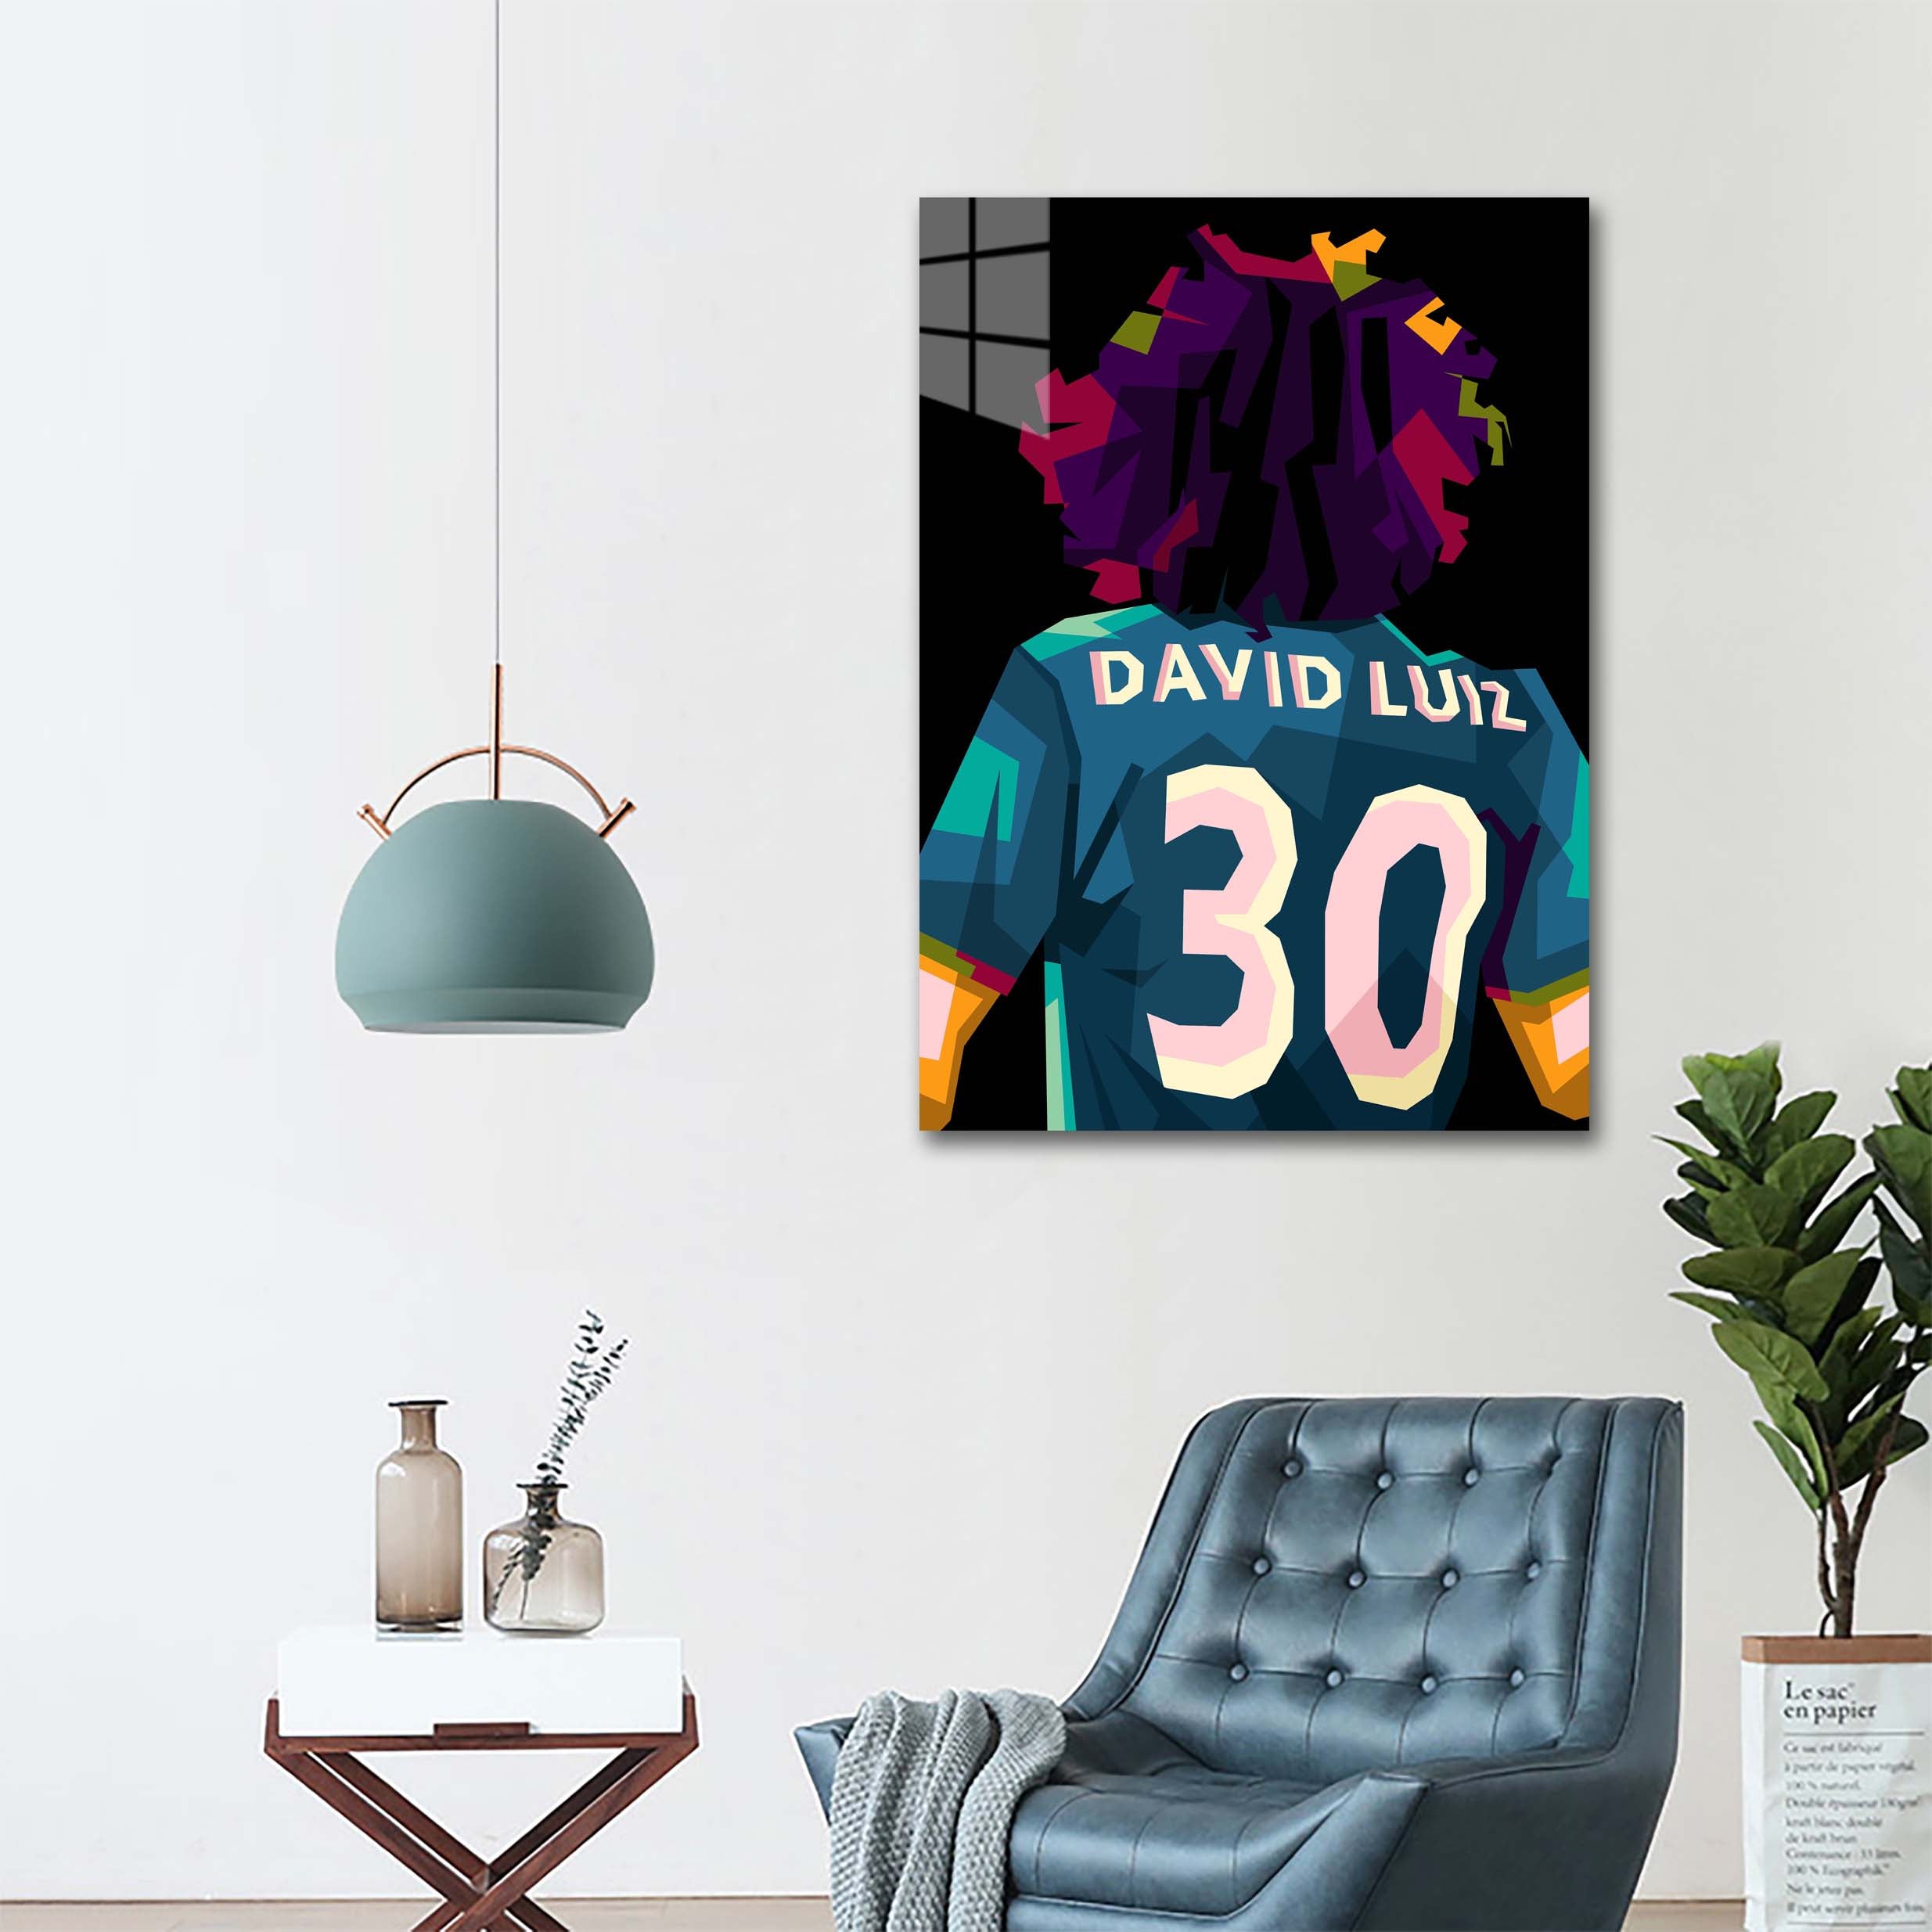 David Luiz in trend wpap pop art -designed by @Amirudin kosong enam